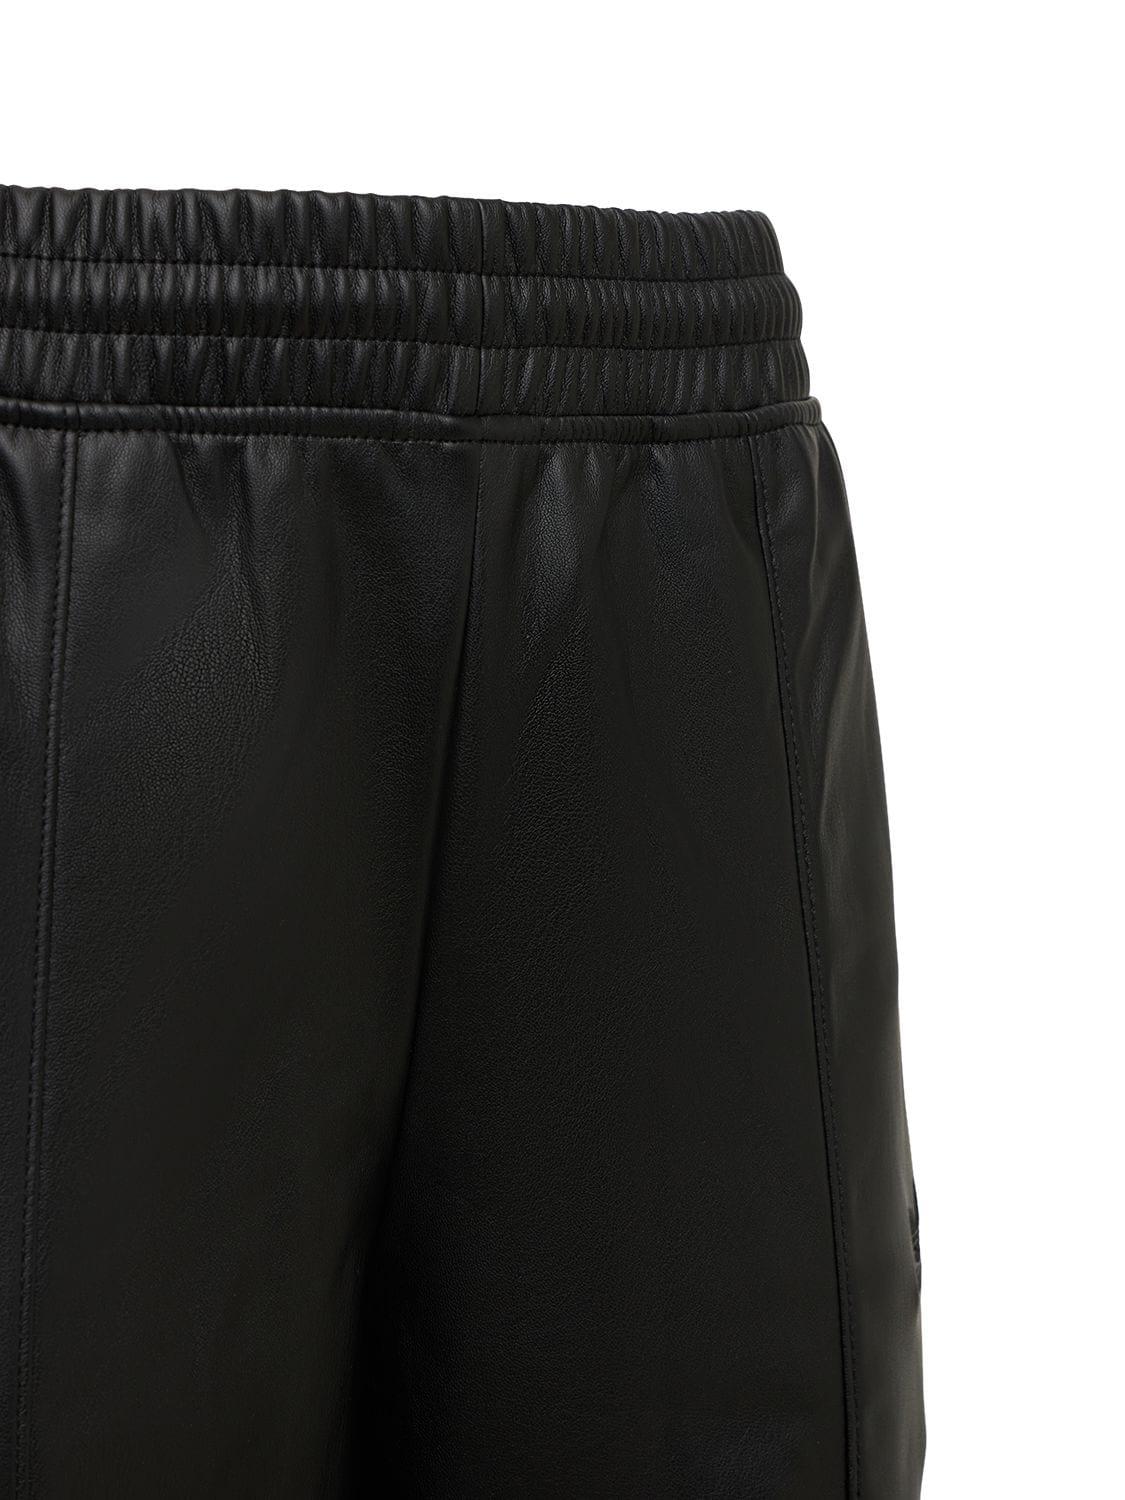 adidas Originals Always Original Faux Leather Track Pants in Black | Lyst